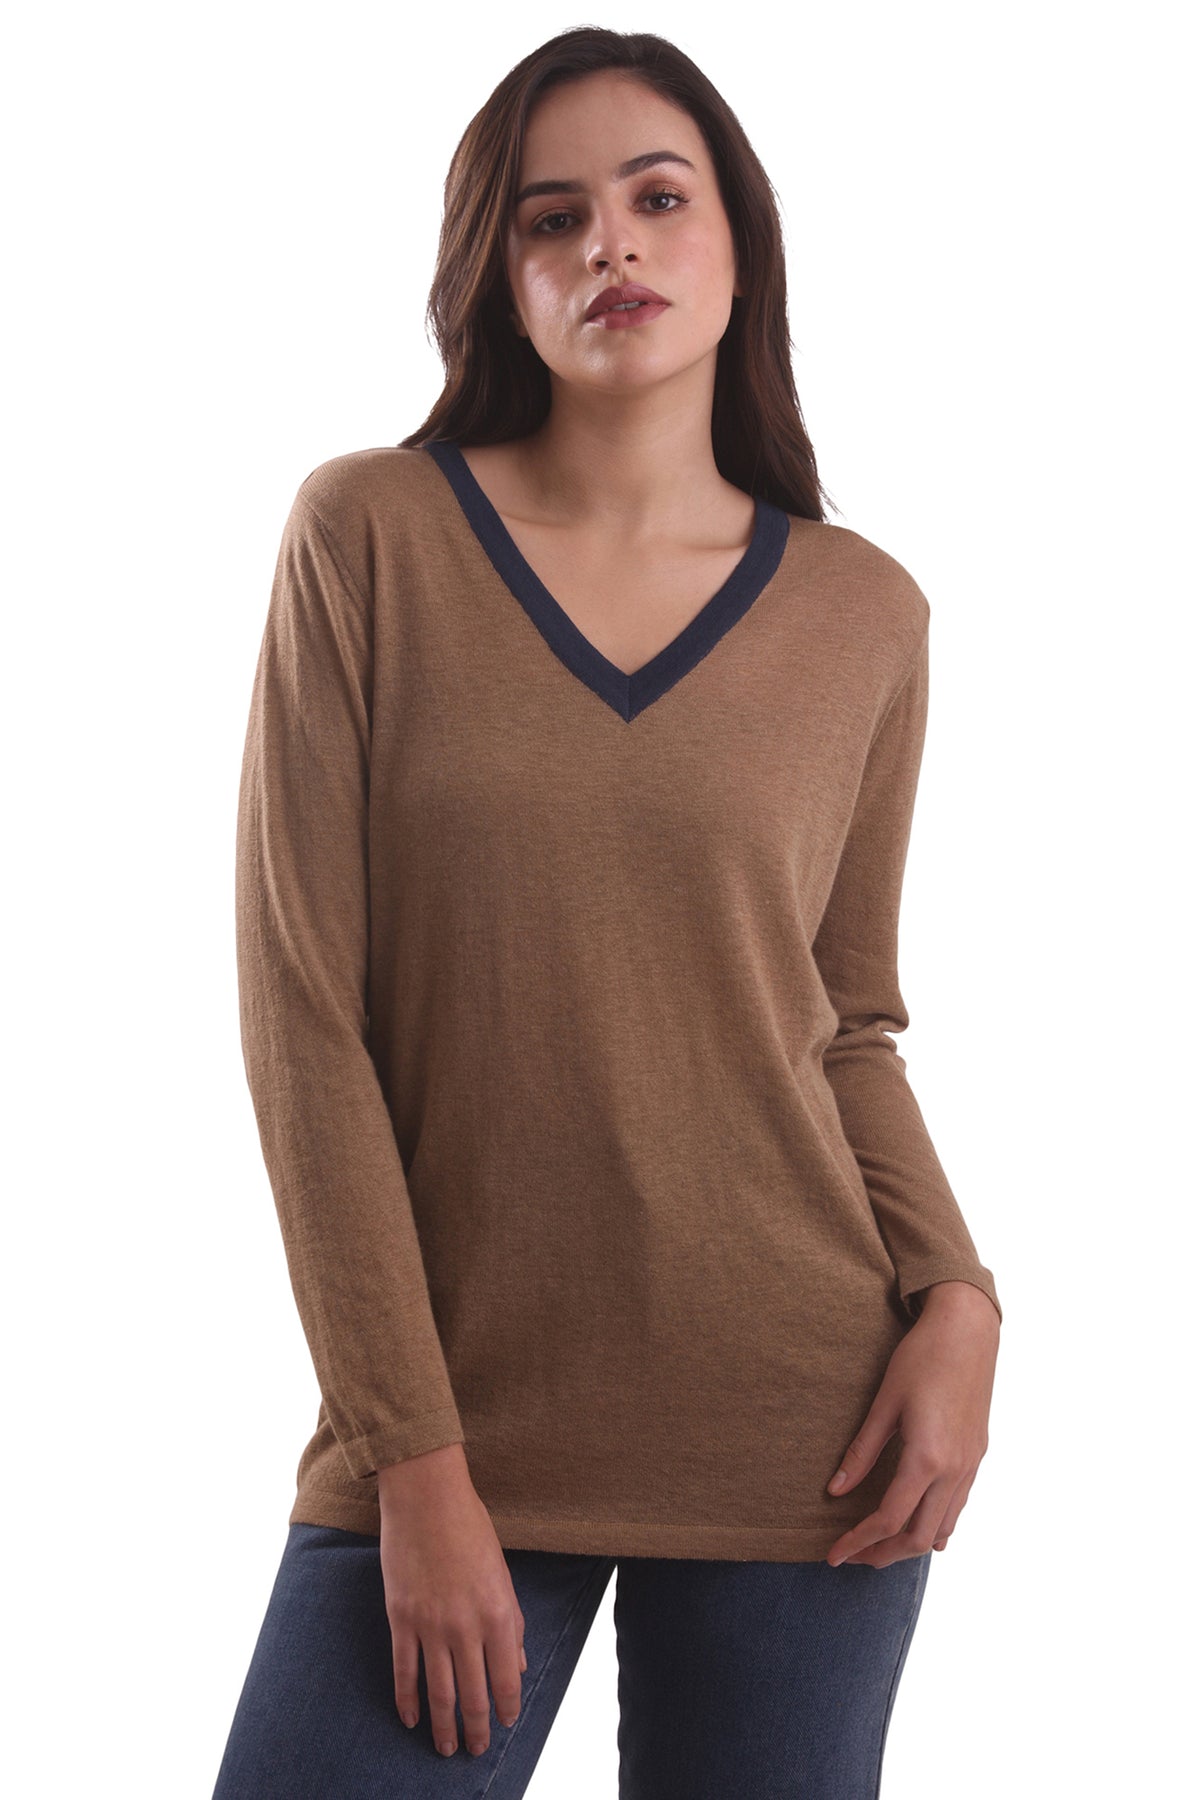 Cashew Brown V-Neck Sweater